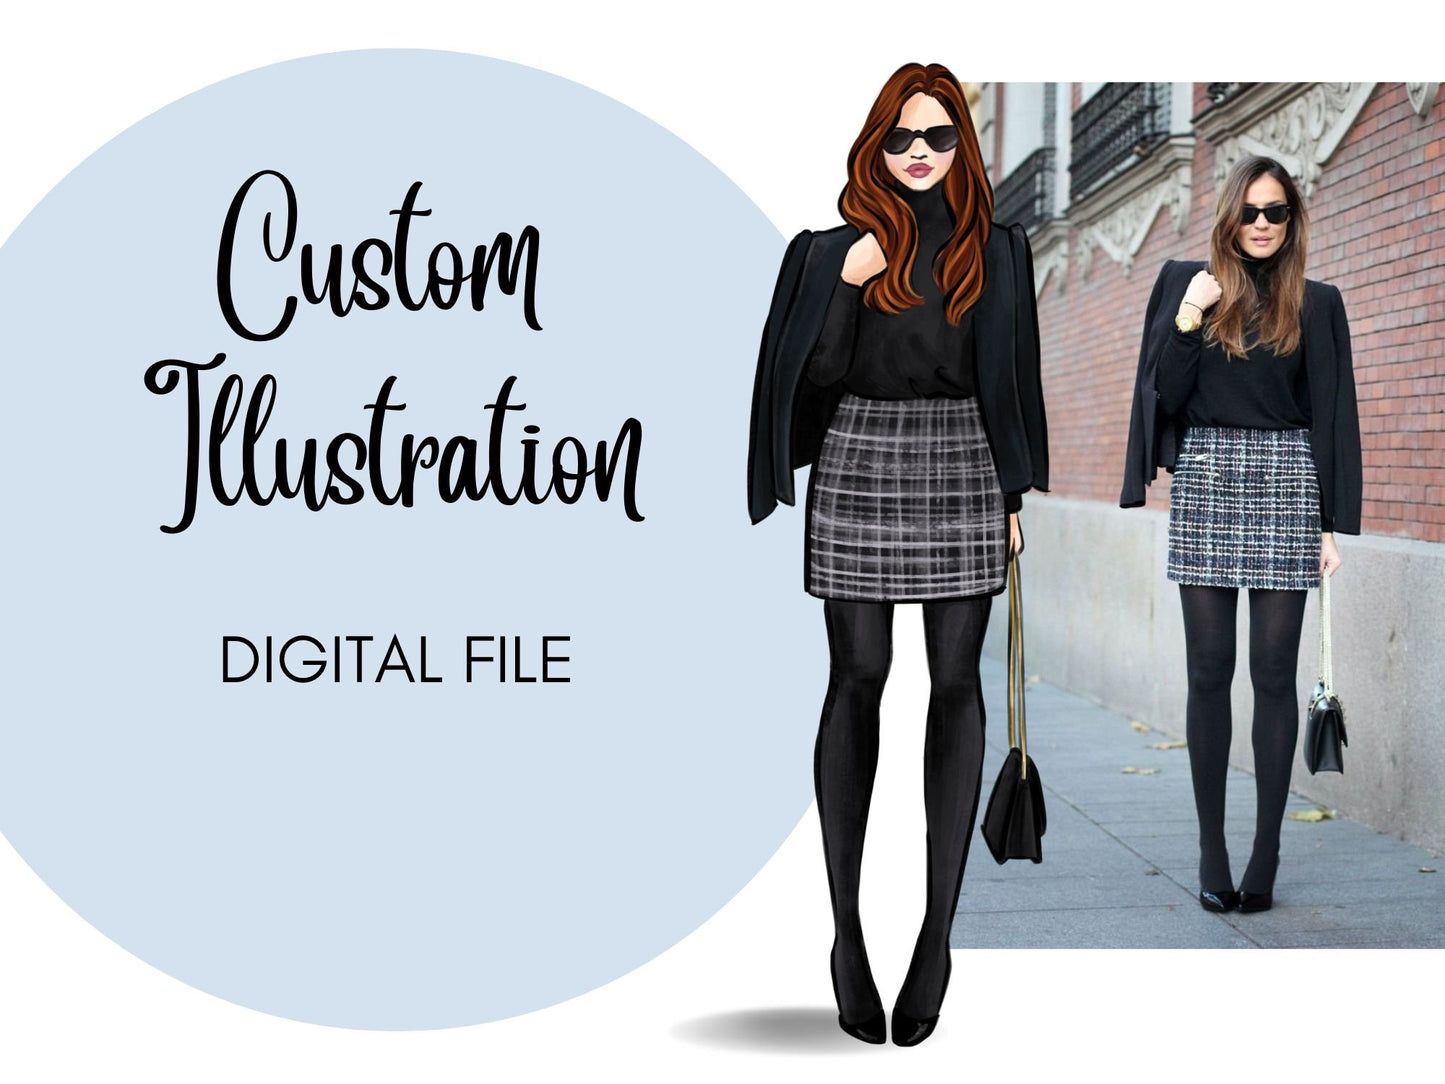 Custom Illustration, custom wedding portraits, custom graduation gift, custom fashion illustration, digital download - PNG